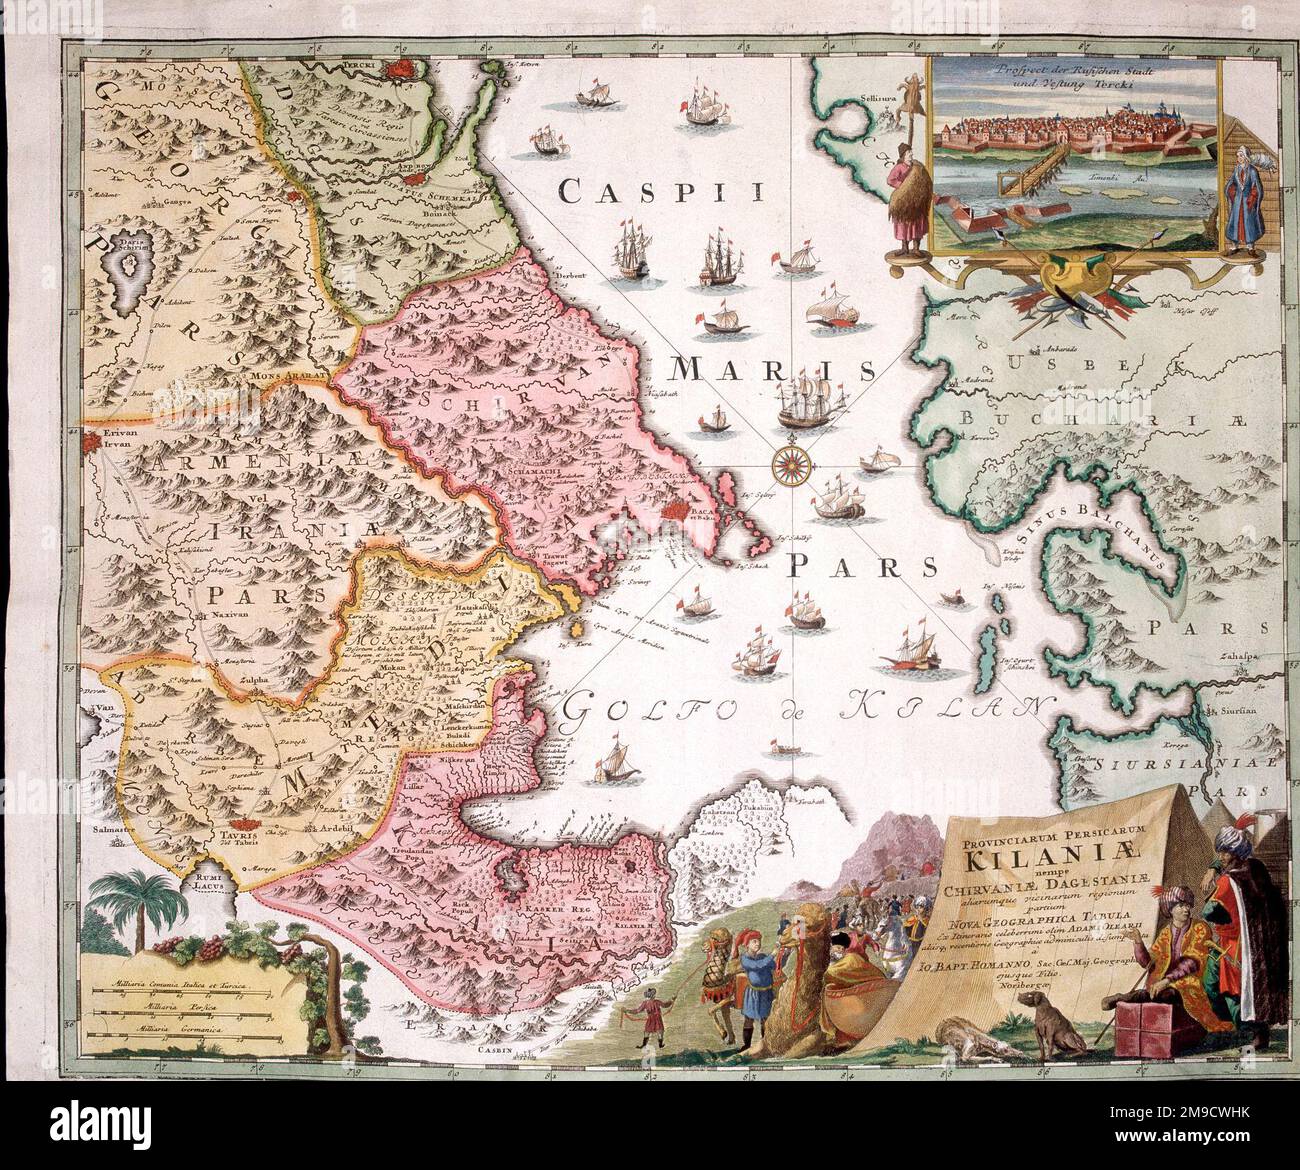 Karte des Kaspischen Meeres, Kaukasus und Turkmenistan aus dem 18. Jahrhundert - Kilaniae, Tereki - Provinciarum Persicarum Kilaniae nempe Chirvaniae Dagestaniae - mit Baku-Einlage Stockfoto